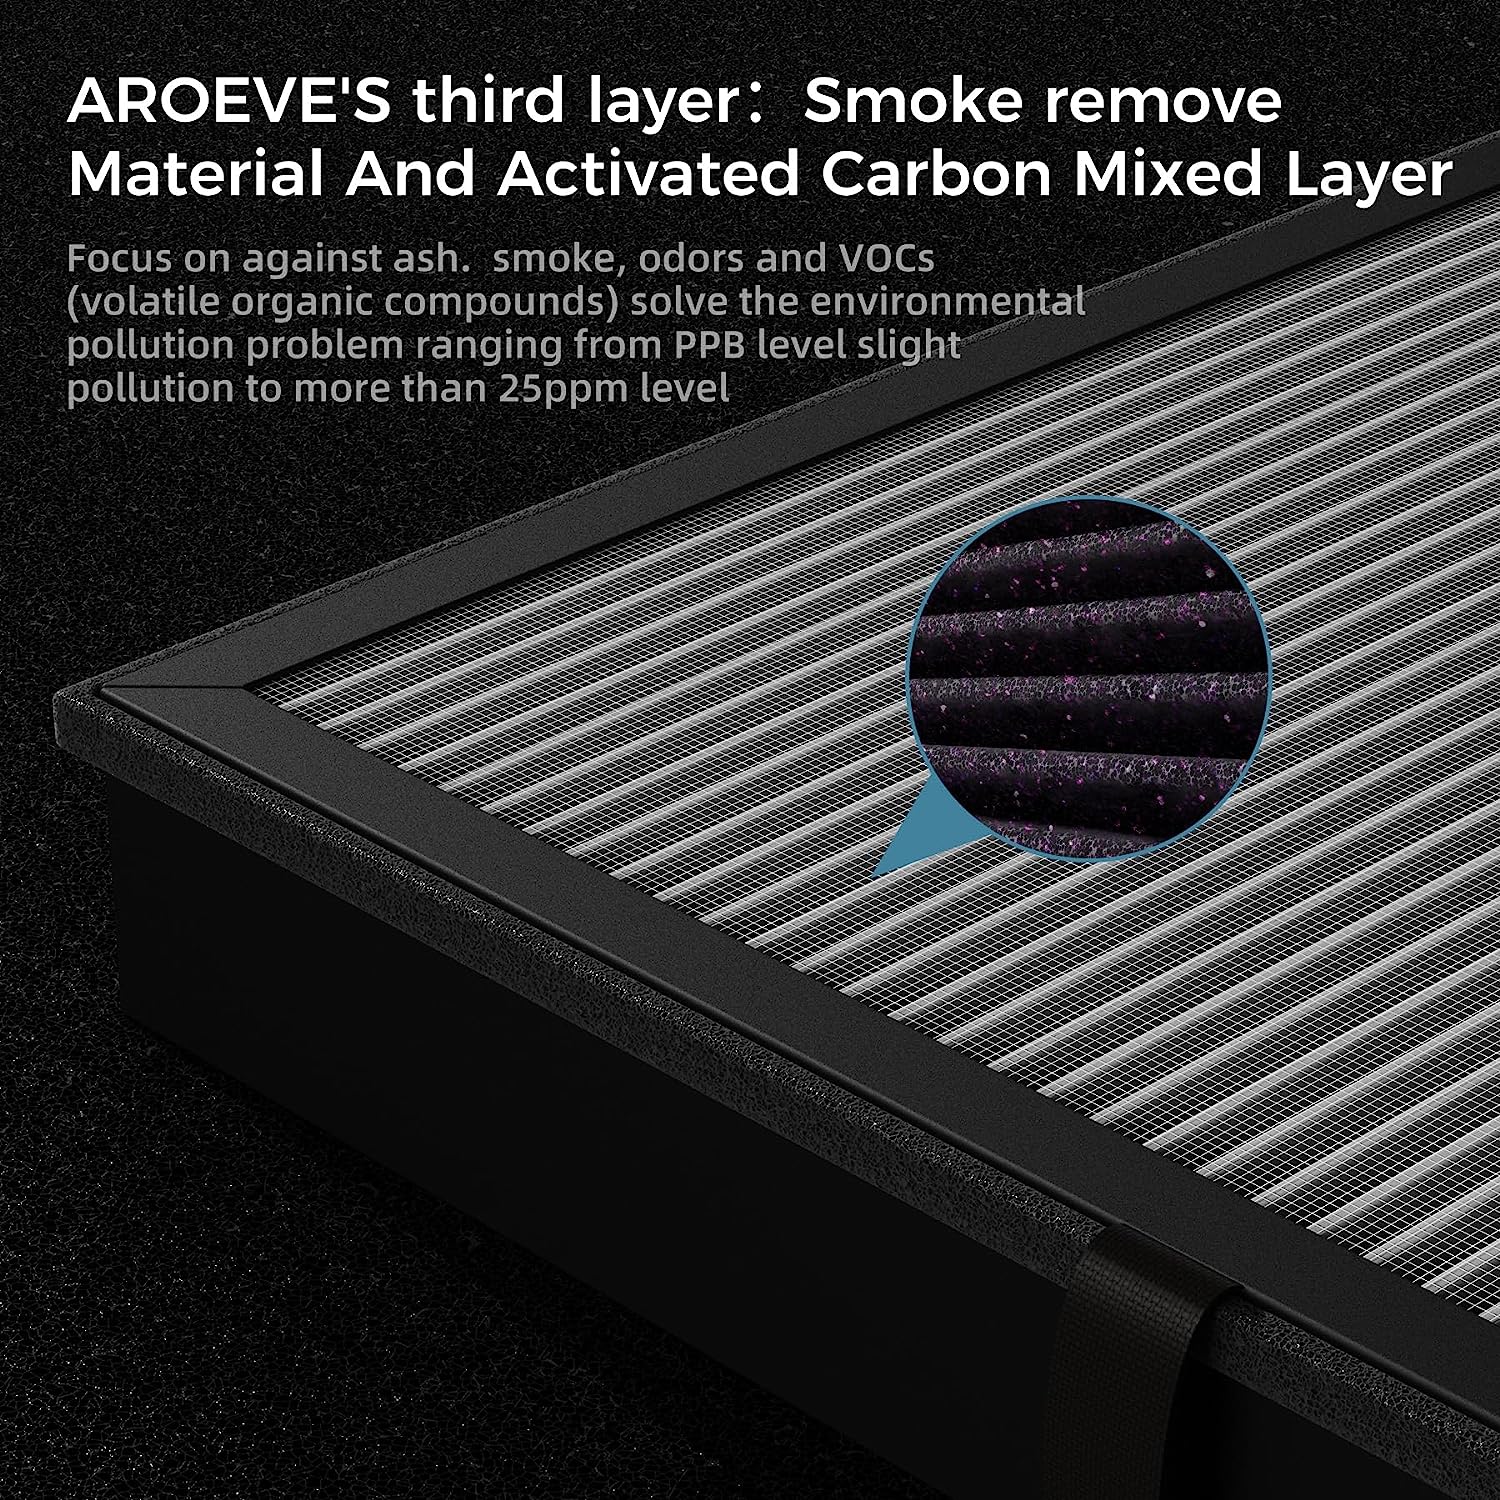 AROEVE HEPA Air Filter Replacement | MK04- Smoke Removal Version(2 packs)